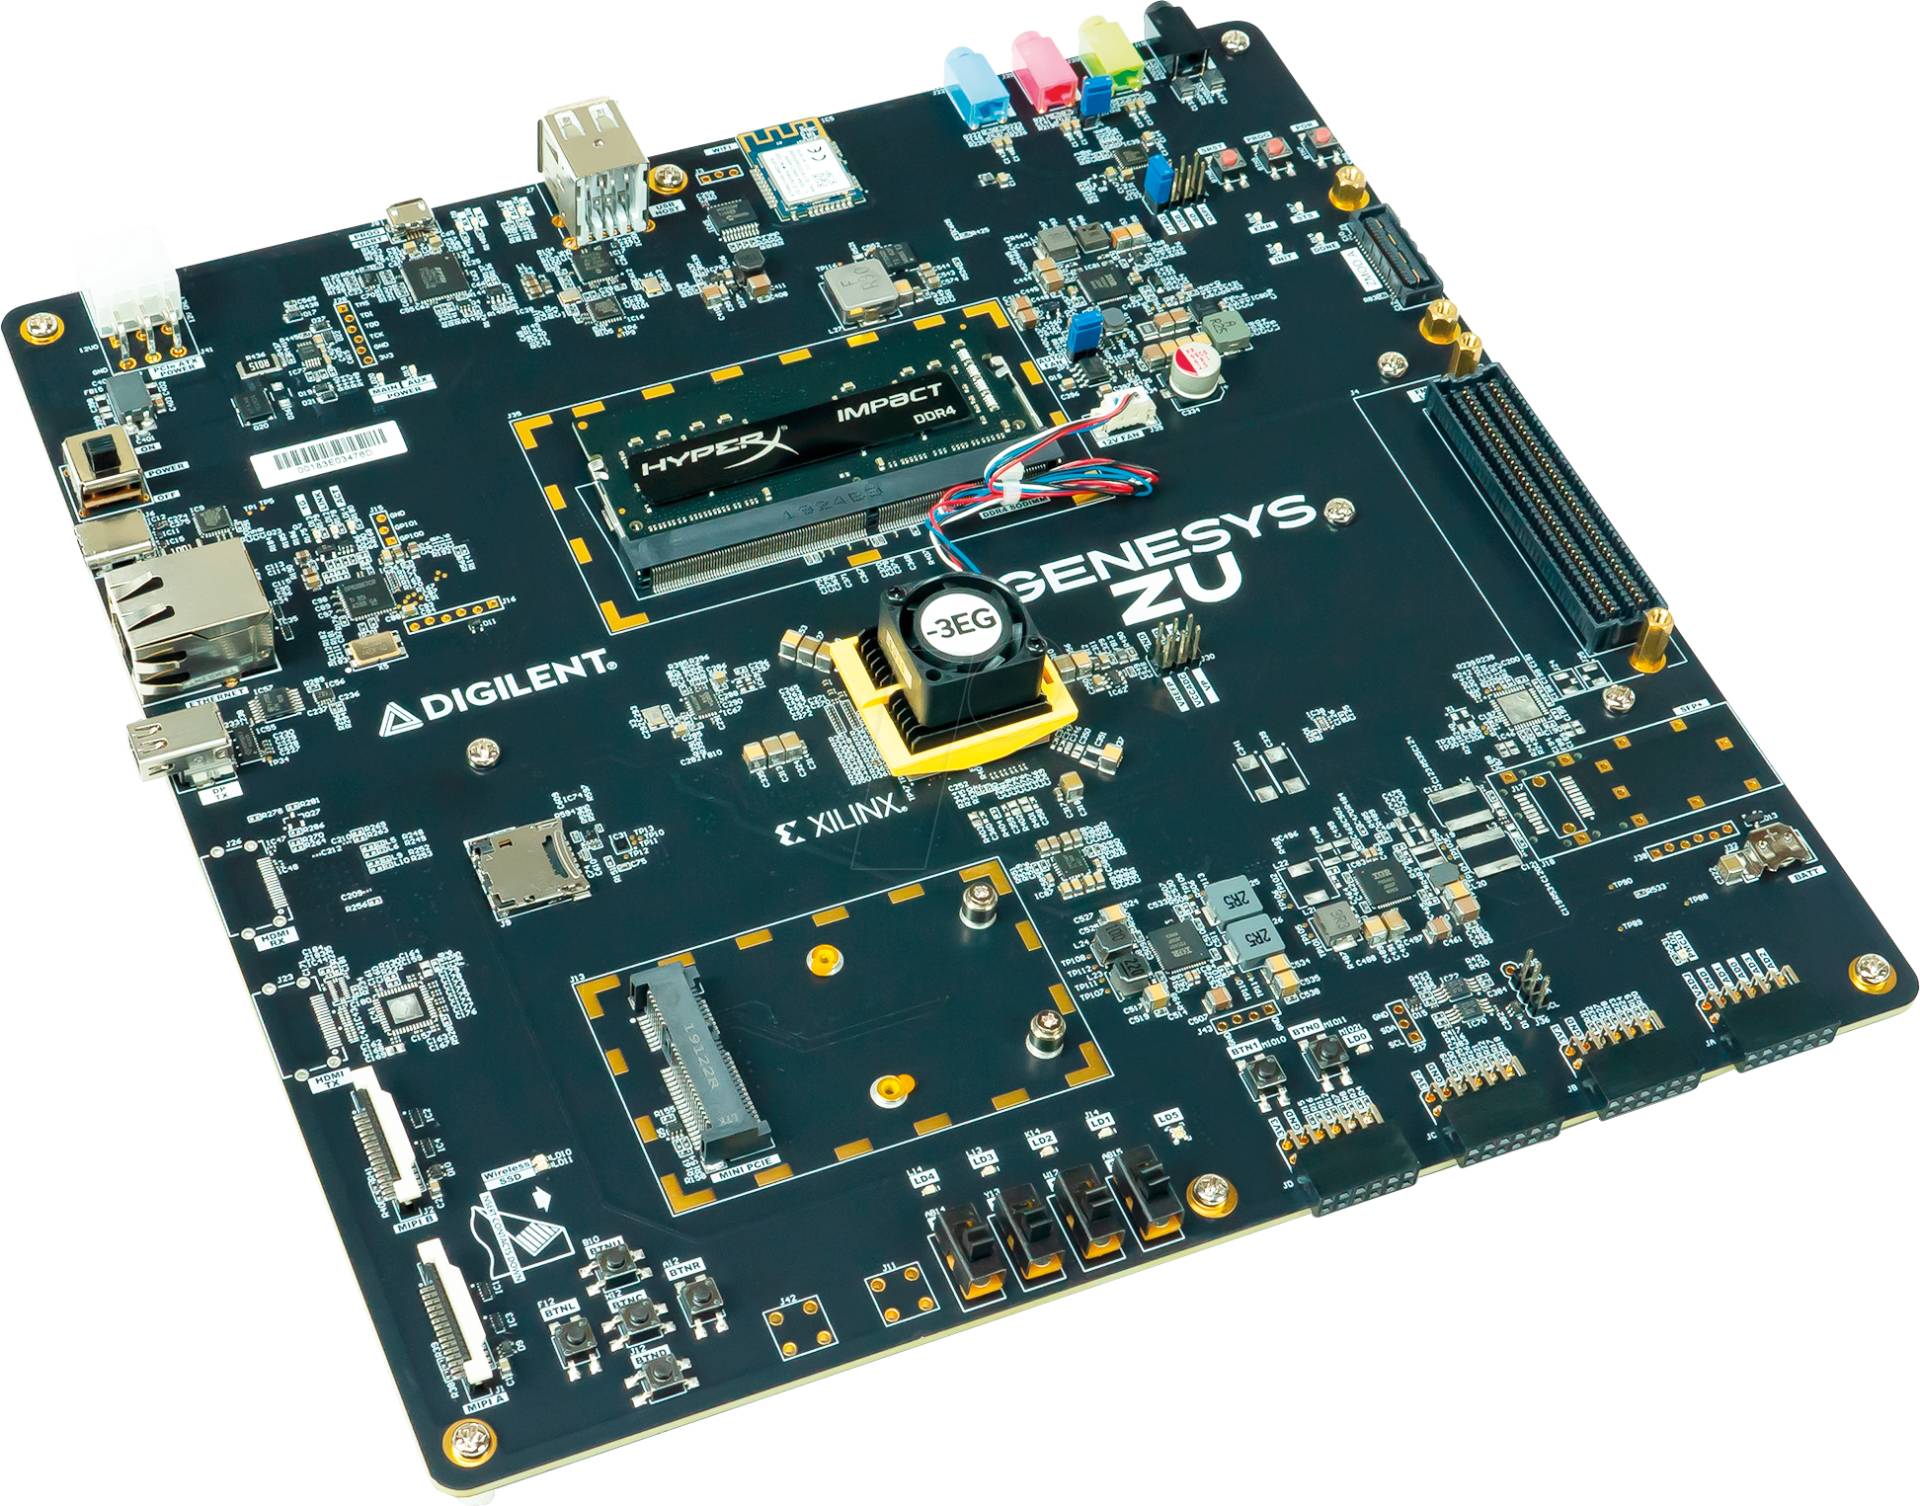 DIG 410-383-5EV - Genesys ZU-5EV: Zynq Ultrascale+ MPSoC Entwicklungsboard von DIGILENT